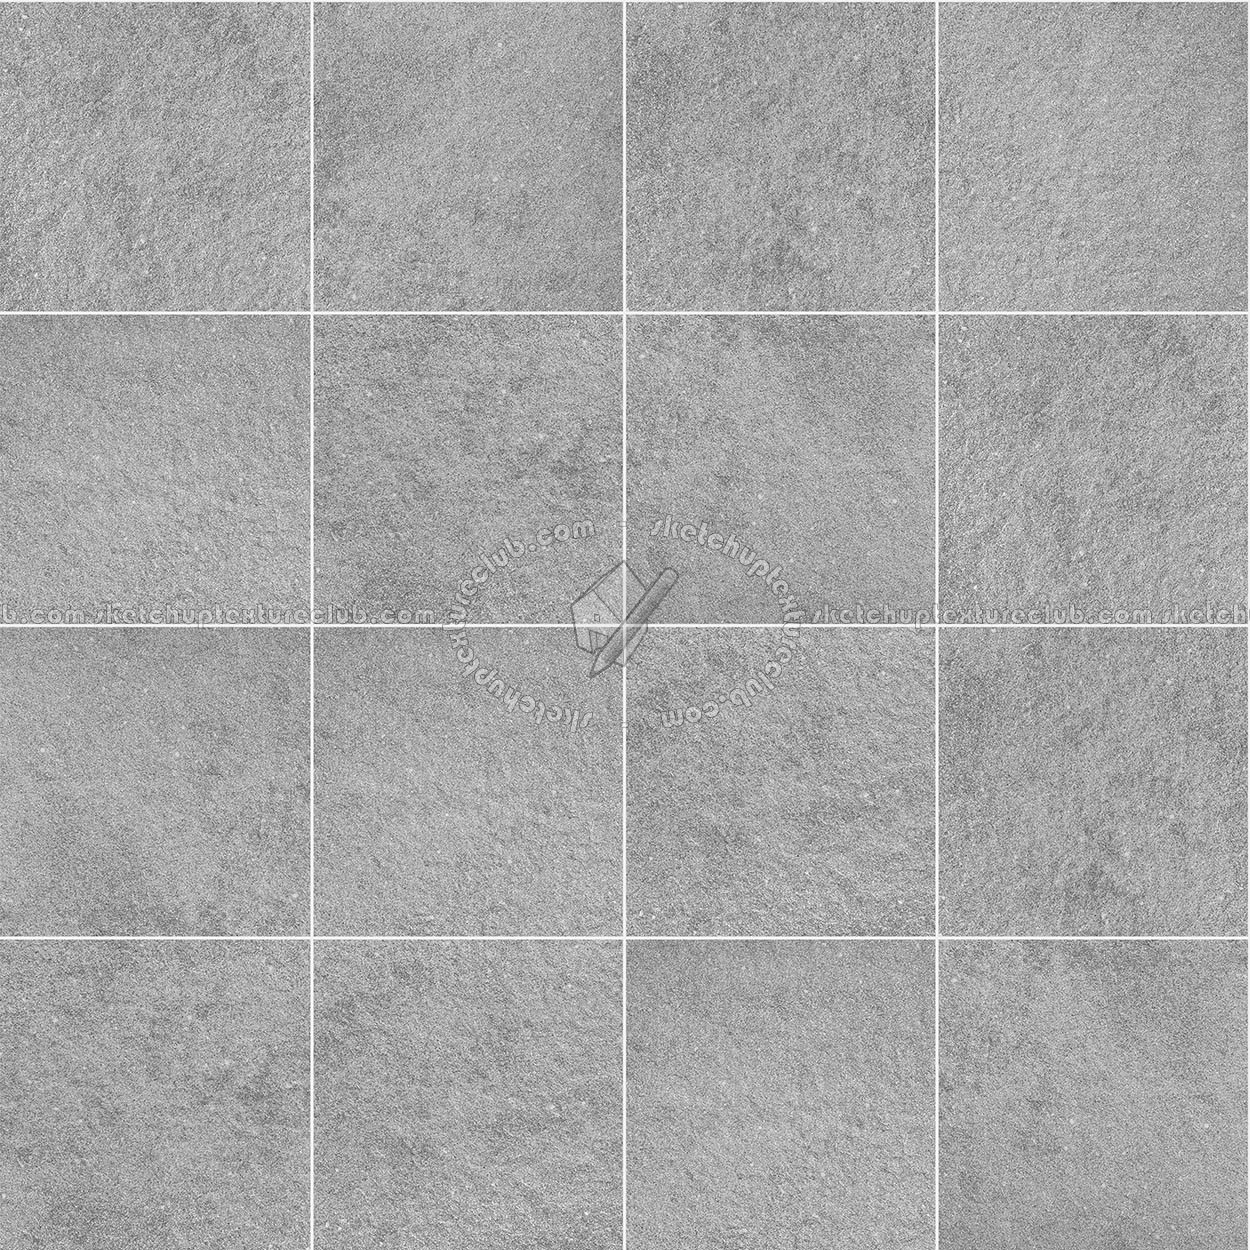 Square stone tile cm120x120 texture seamless 15973